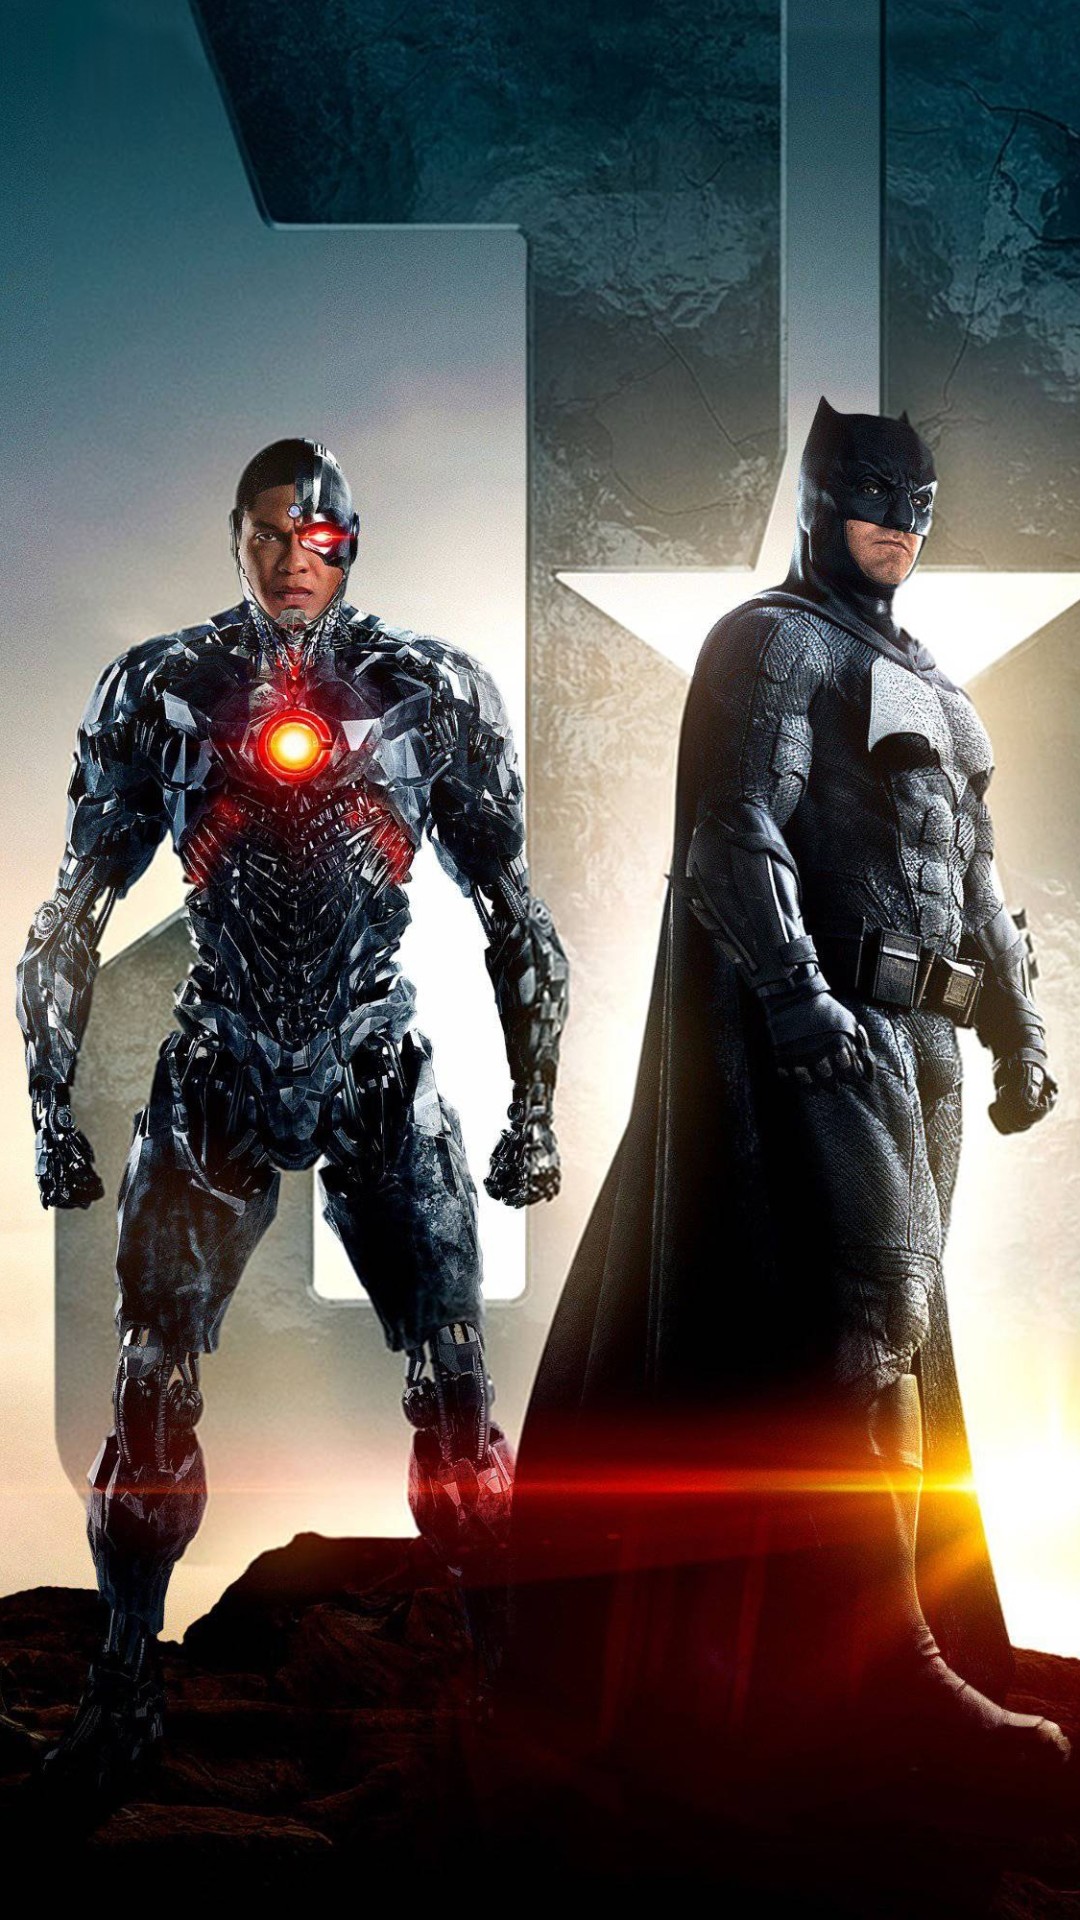 justice league wallpaper,superhero,fictional character,movie,action figure,action film